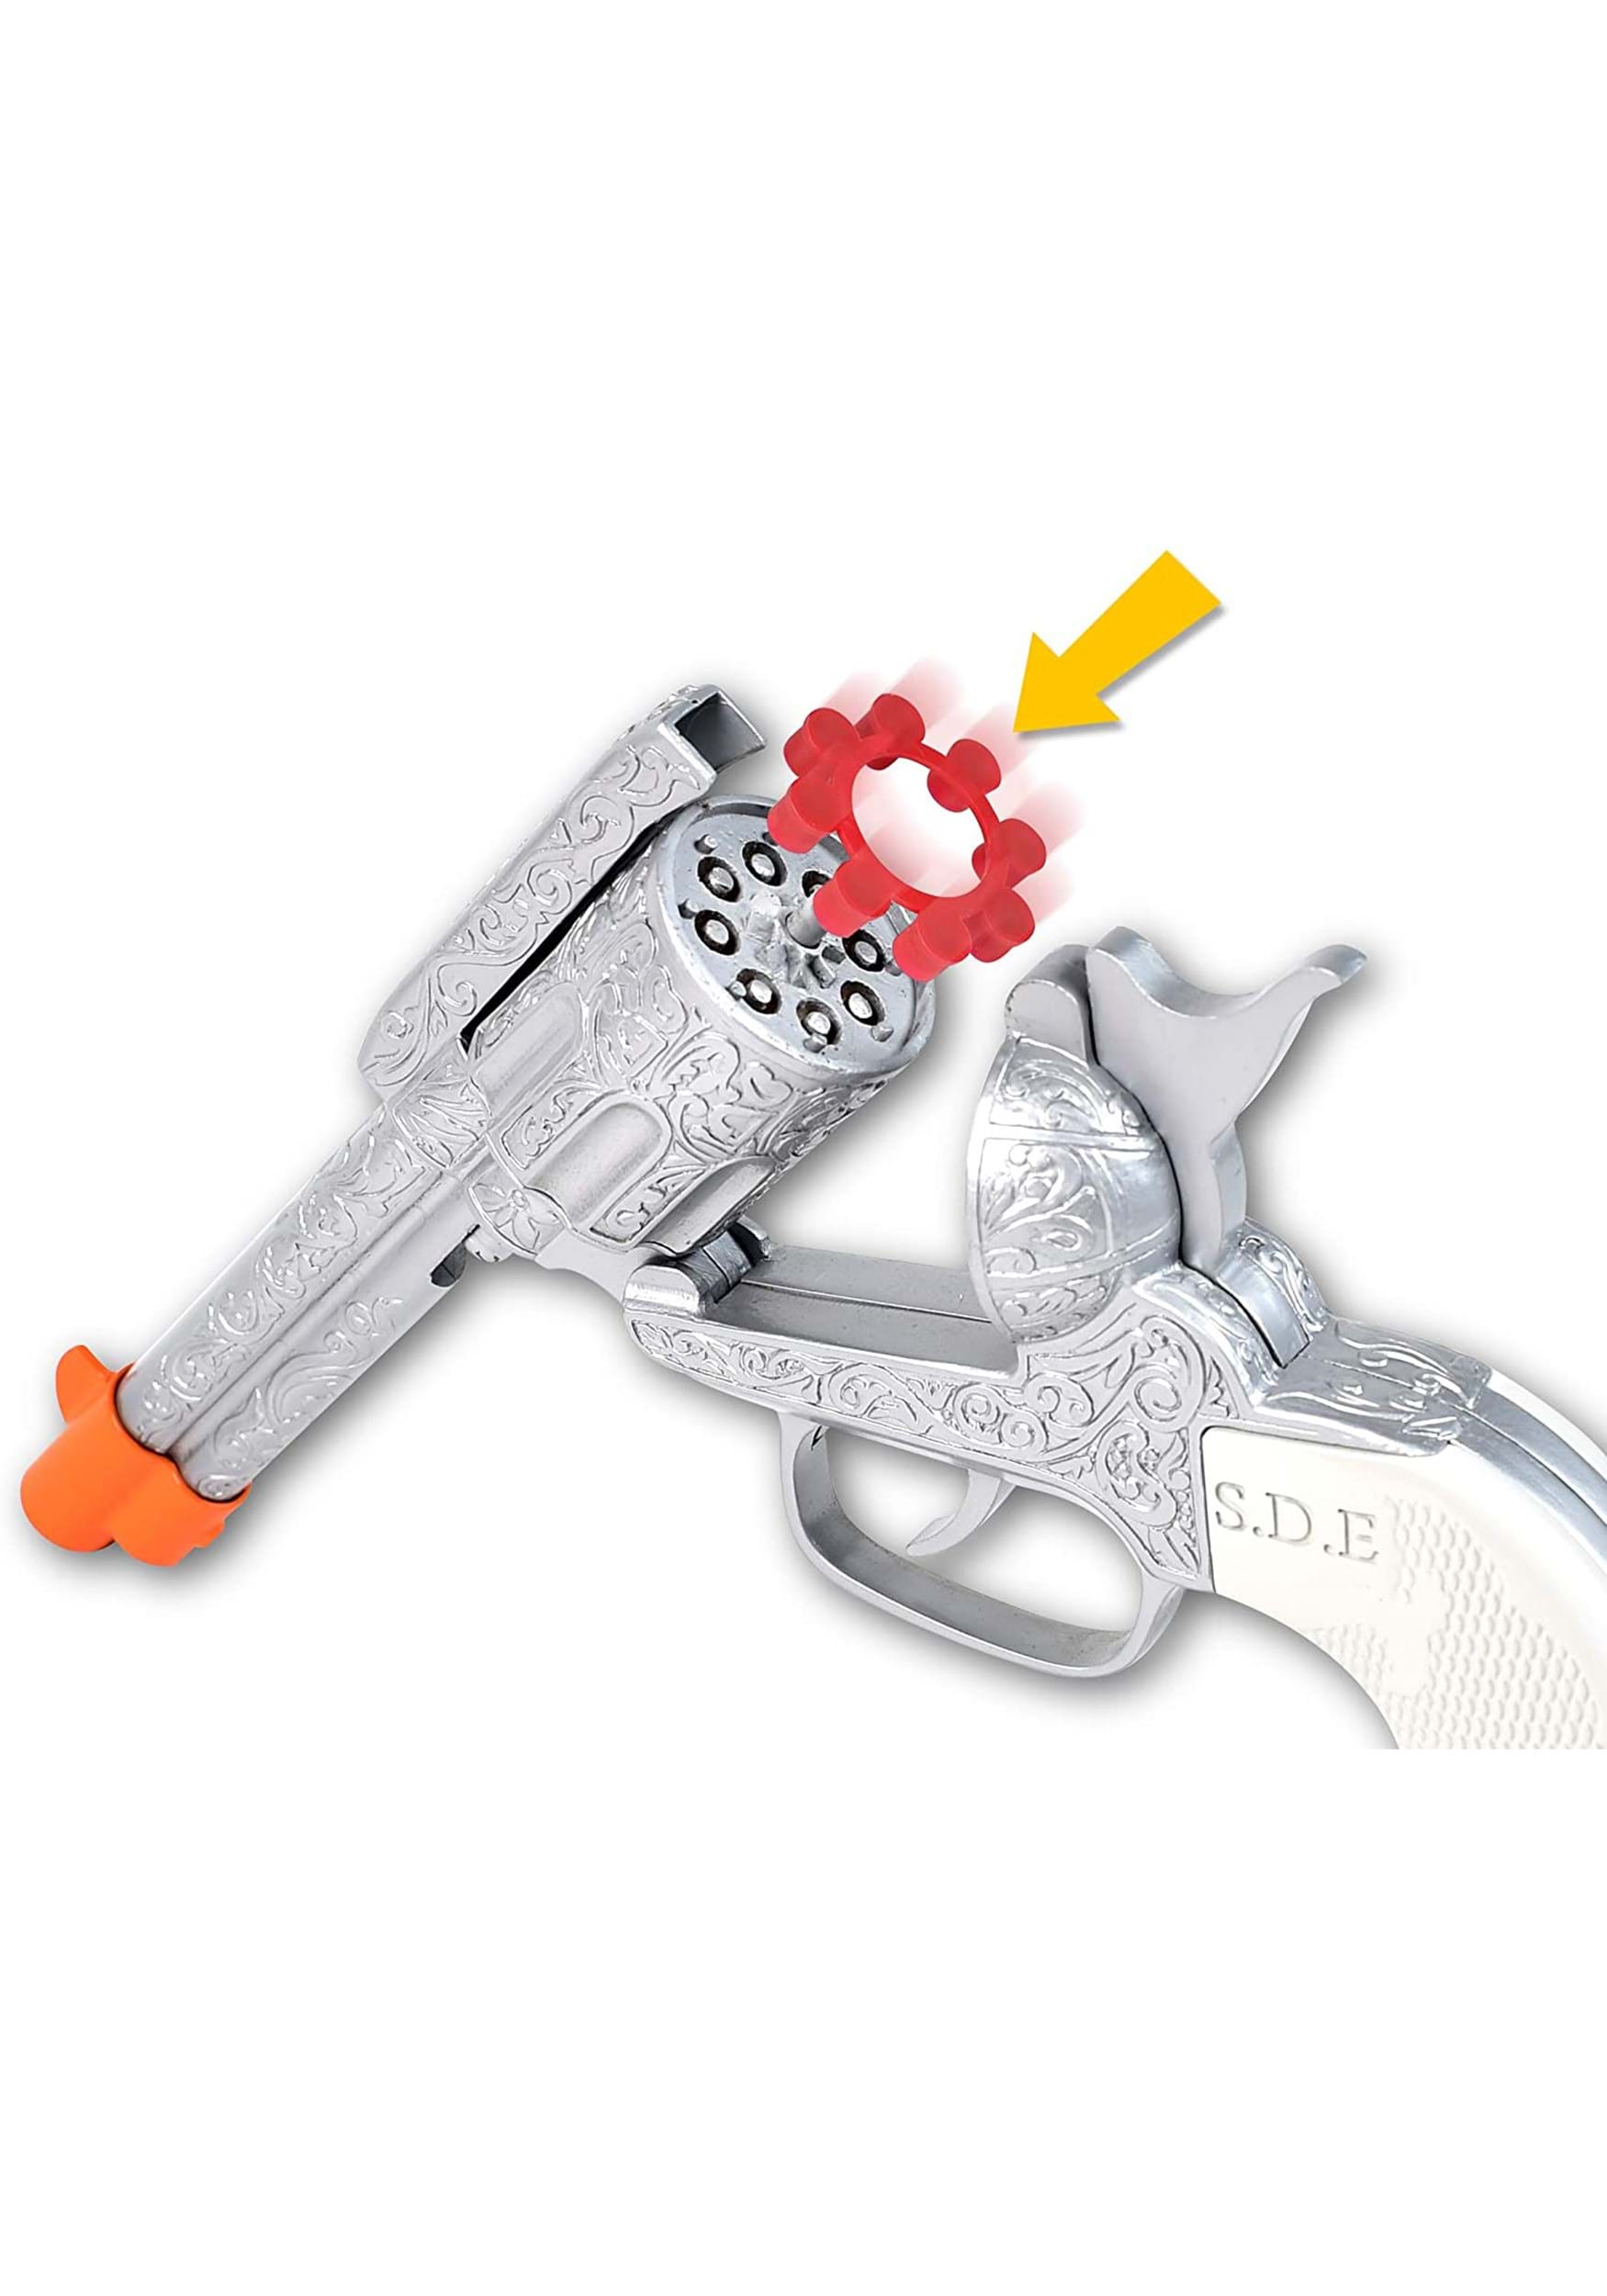 toy cowboy guns for kids